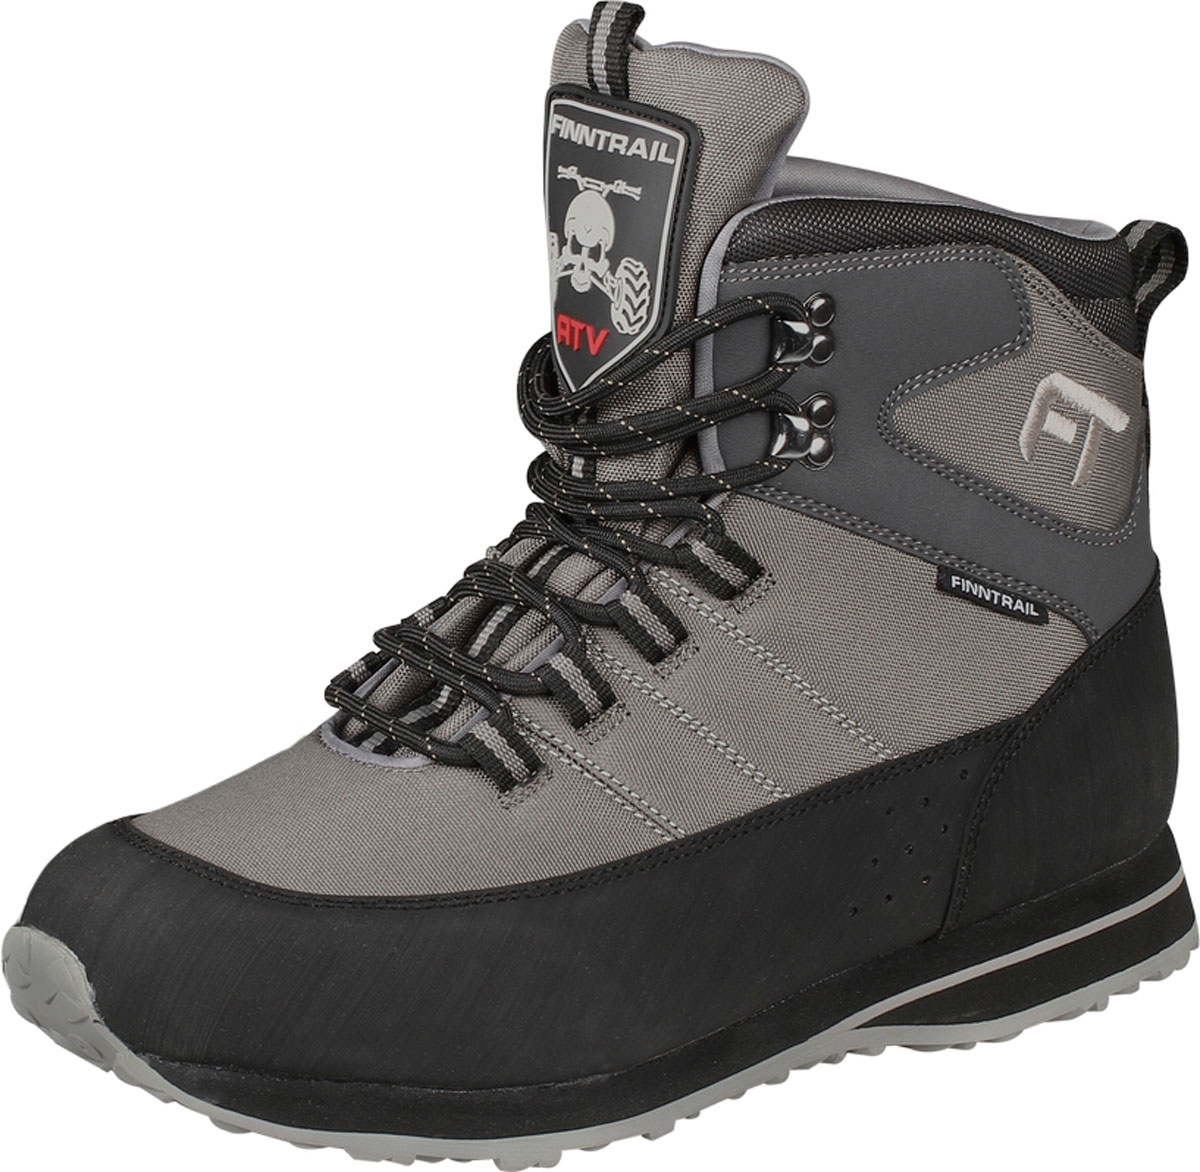 Ботинки для рыбалки Finntrail New Stalker, цвет: серый, черный. 5192. Размер 46